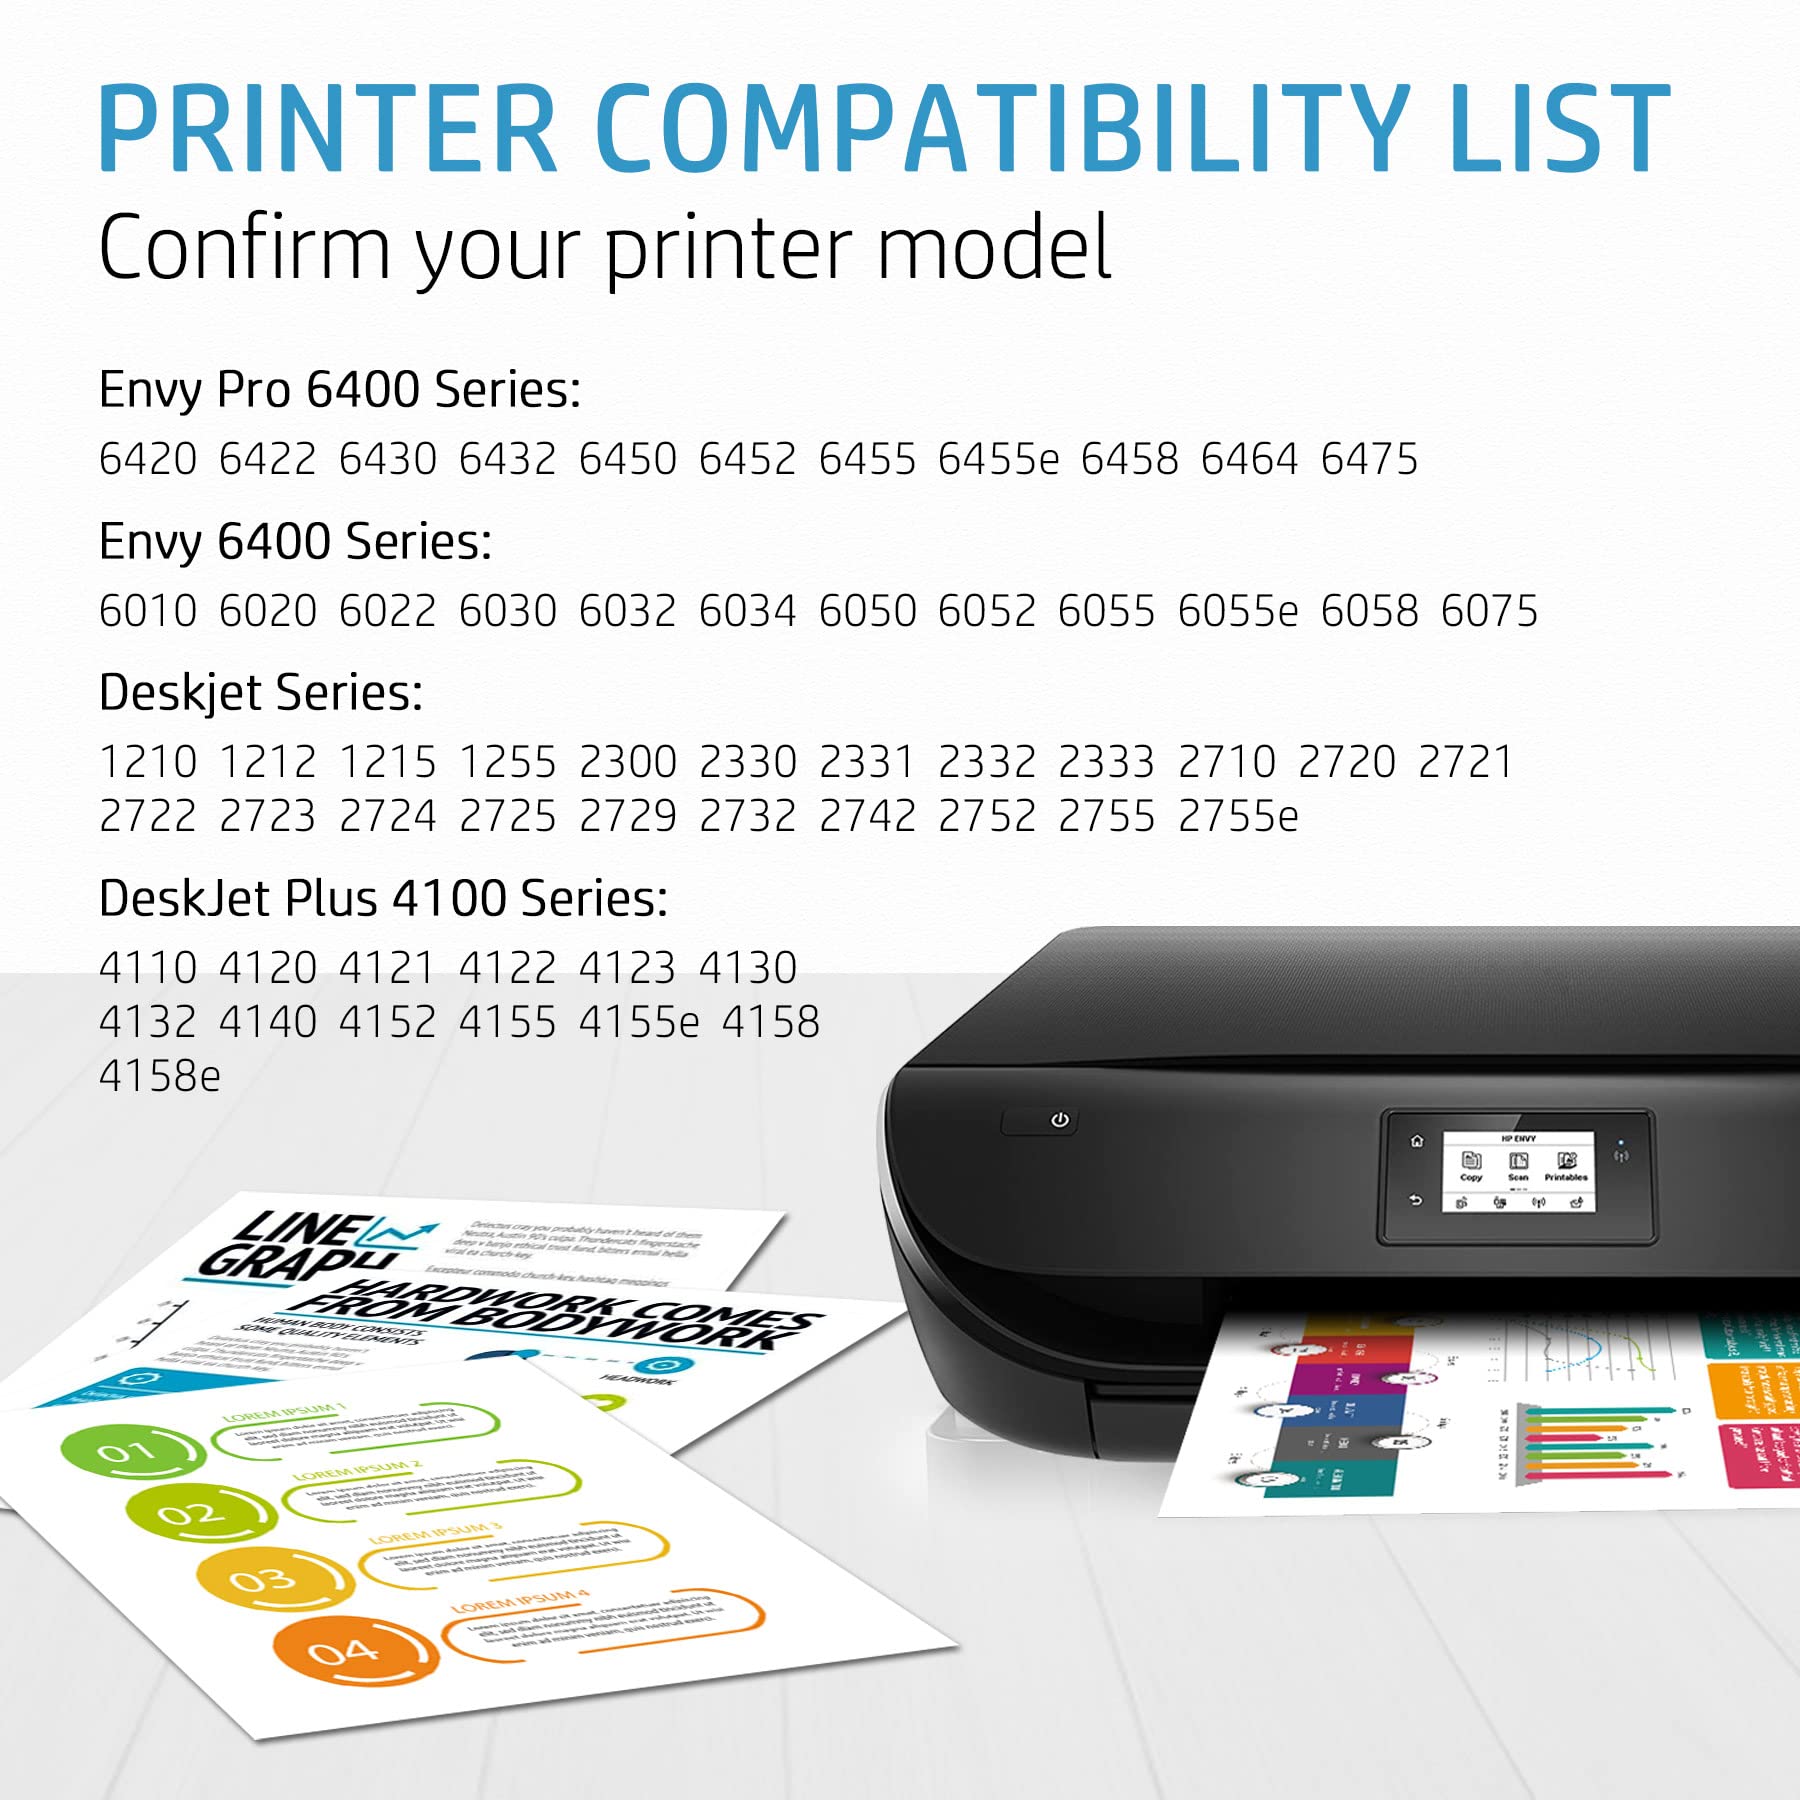 7Magic Remanufactured Ink Cartridge Replacement for HP 67XL Printer Ink for DeskJet 2755e 2755 2752 4155 Envy 6000 6055e 6055 6075 6400 6455 6455e 6475 6452 6458 Printer(1 Black, 1 Tri-Color)